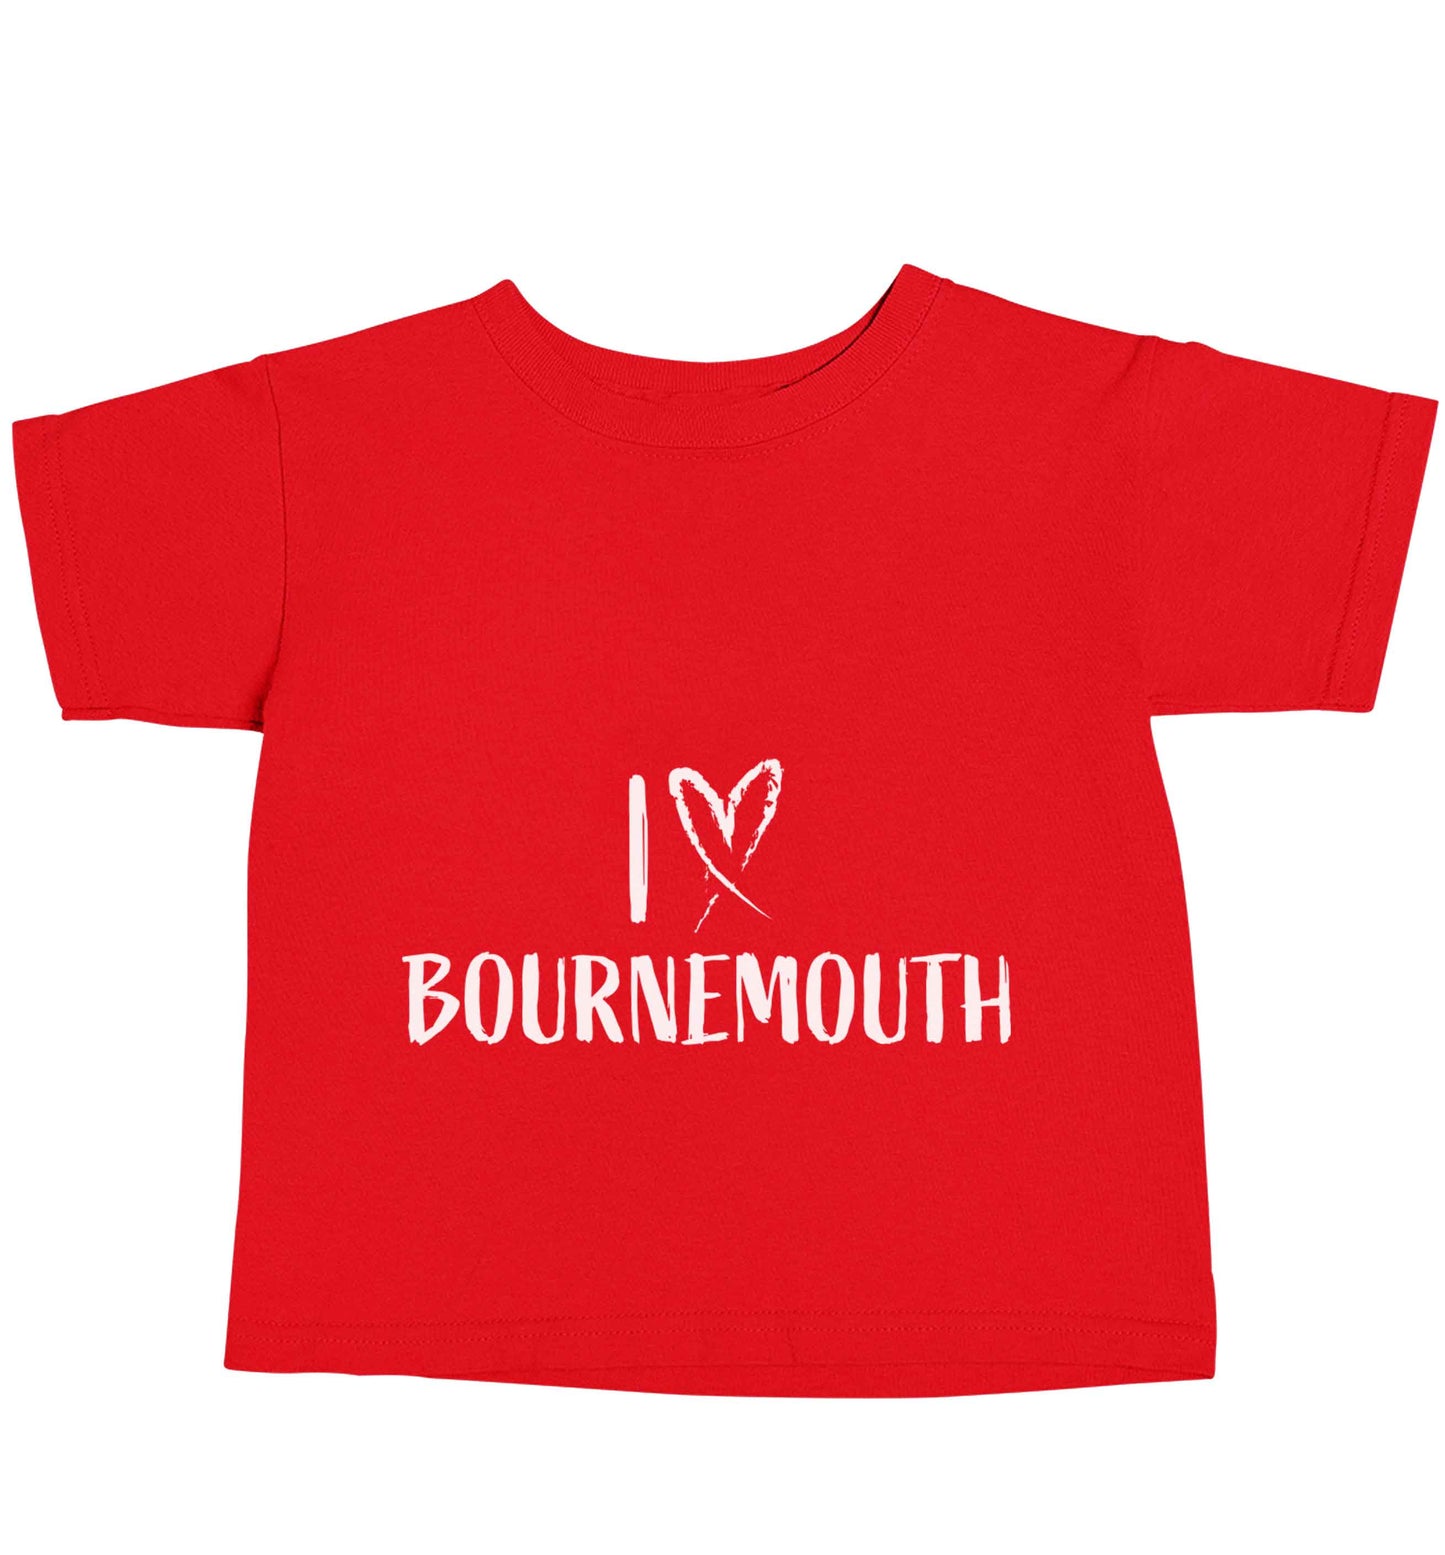 I love Bournemouth red baby toddler Tshirt 2 Years